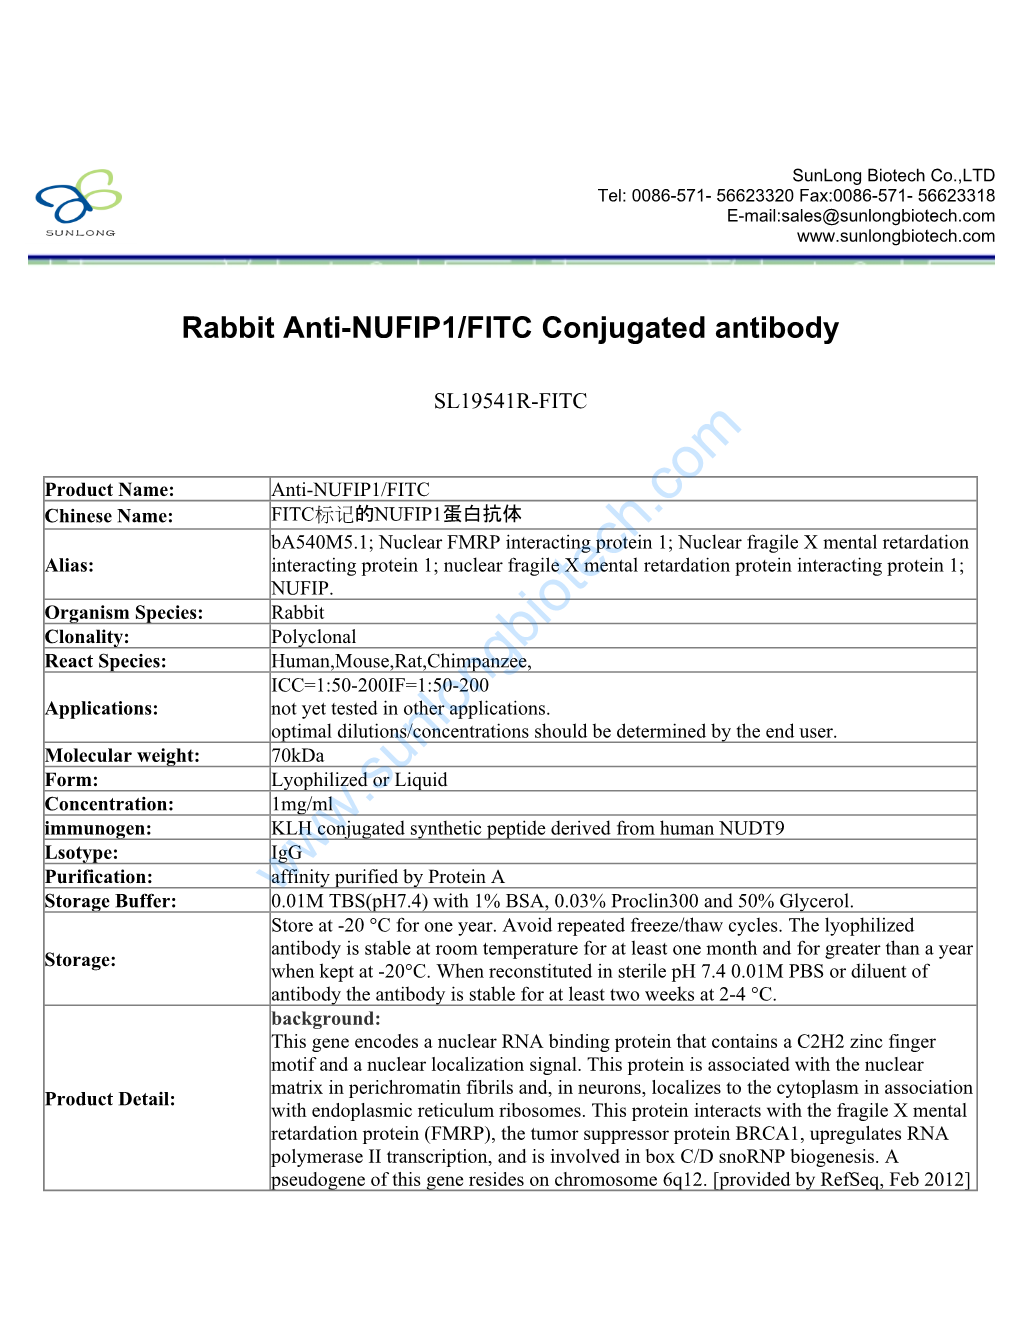 Rabbit Anti-NUFIP1/FITC Conjugated Antibody